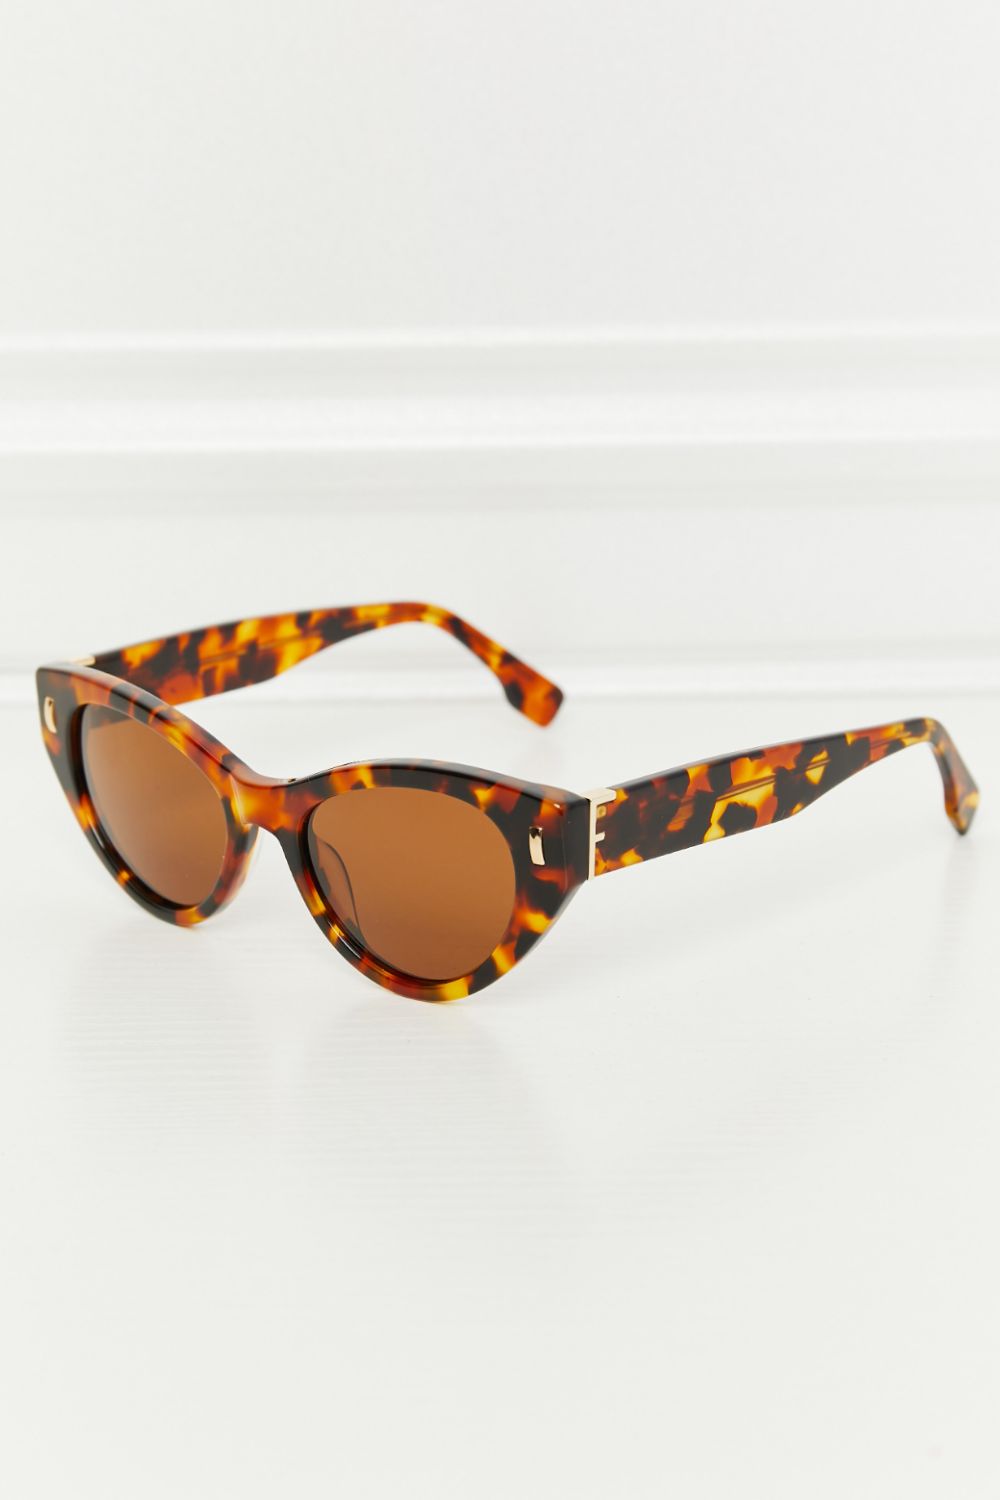 Uylee's Boutique Tortoiseshell Acetate Frame Sunglasses